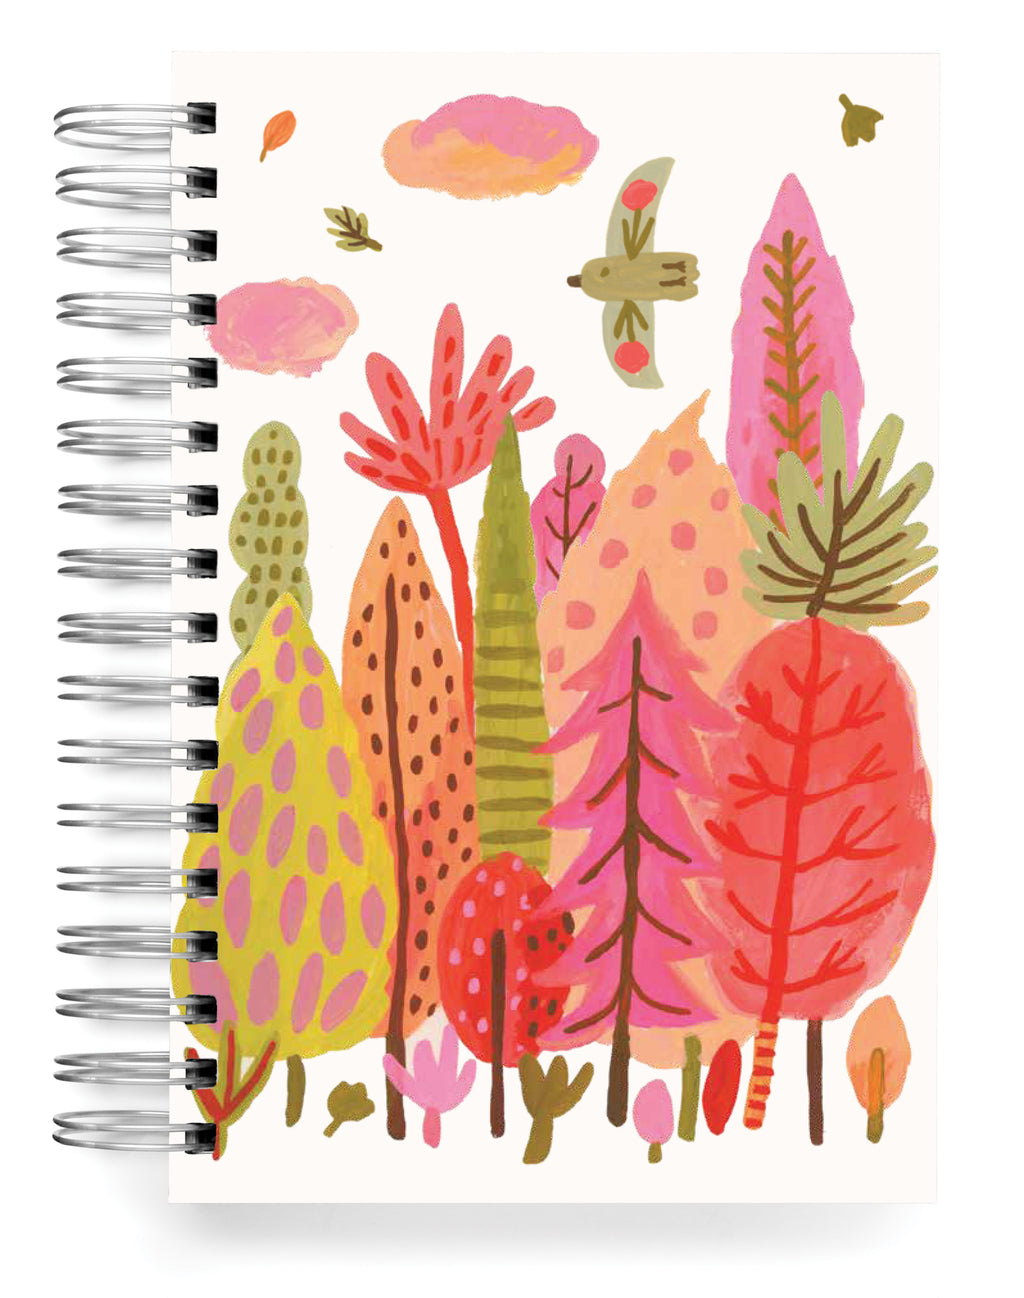 Fall Forest jumbo journal